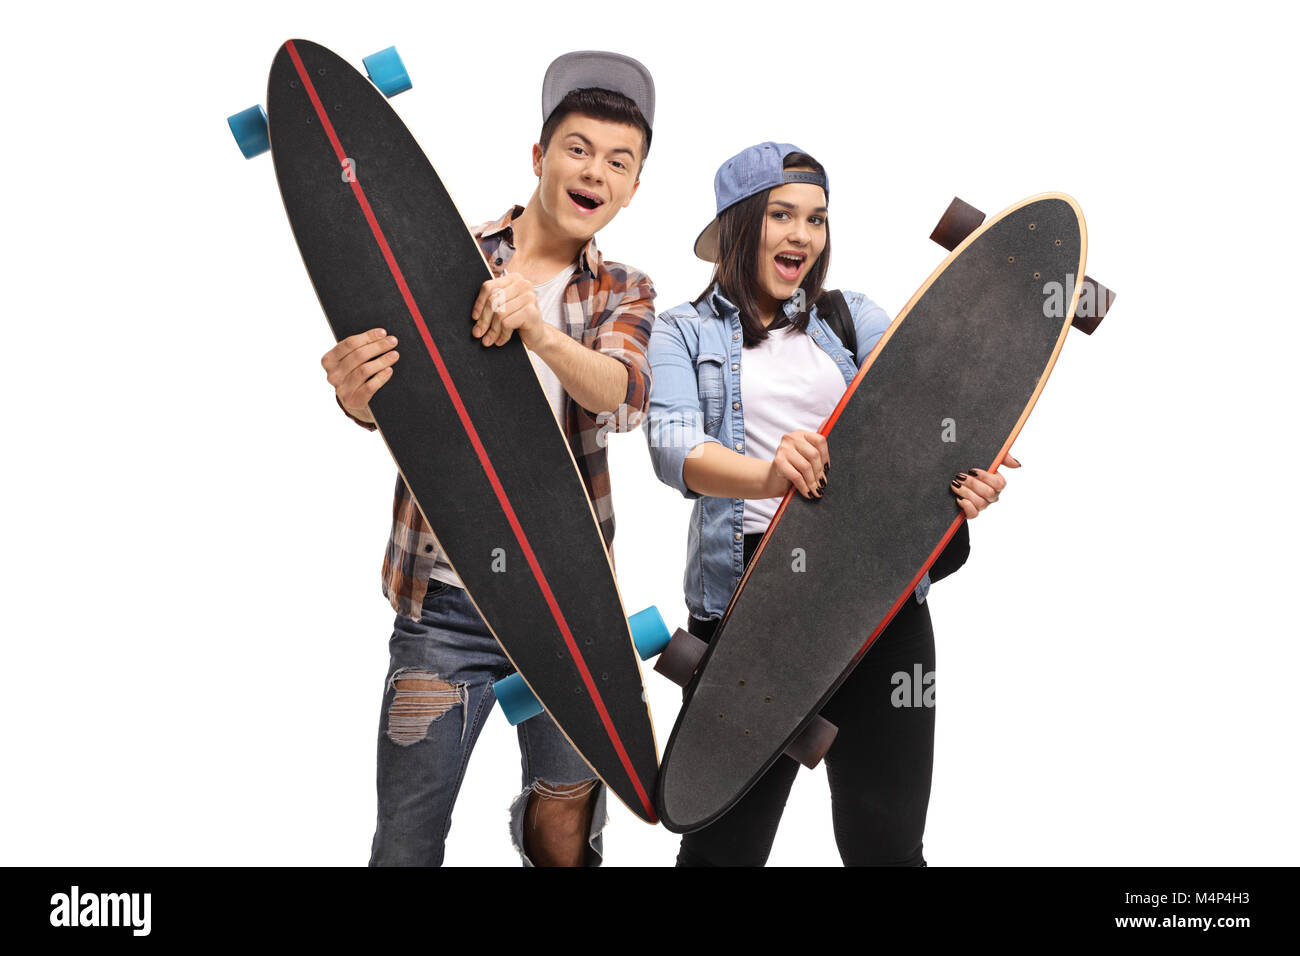 Joyful teenagers with longboards isolated on white background Stock Photo